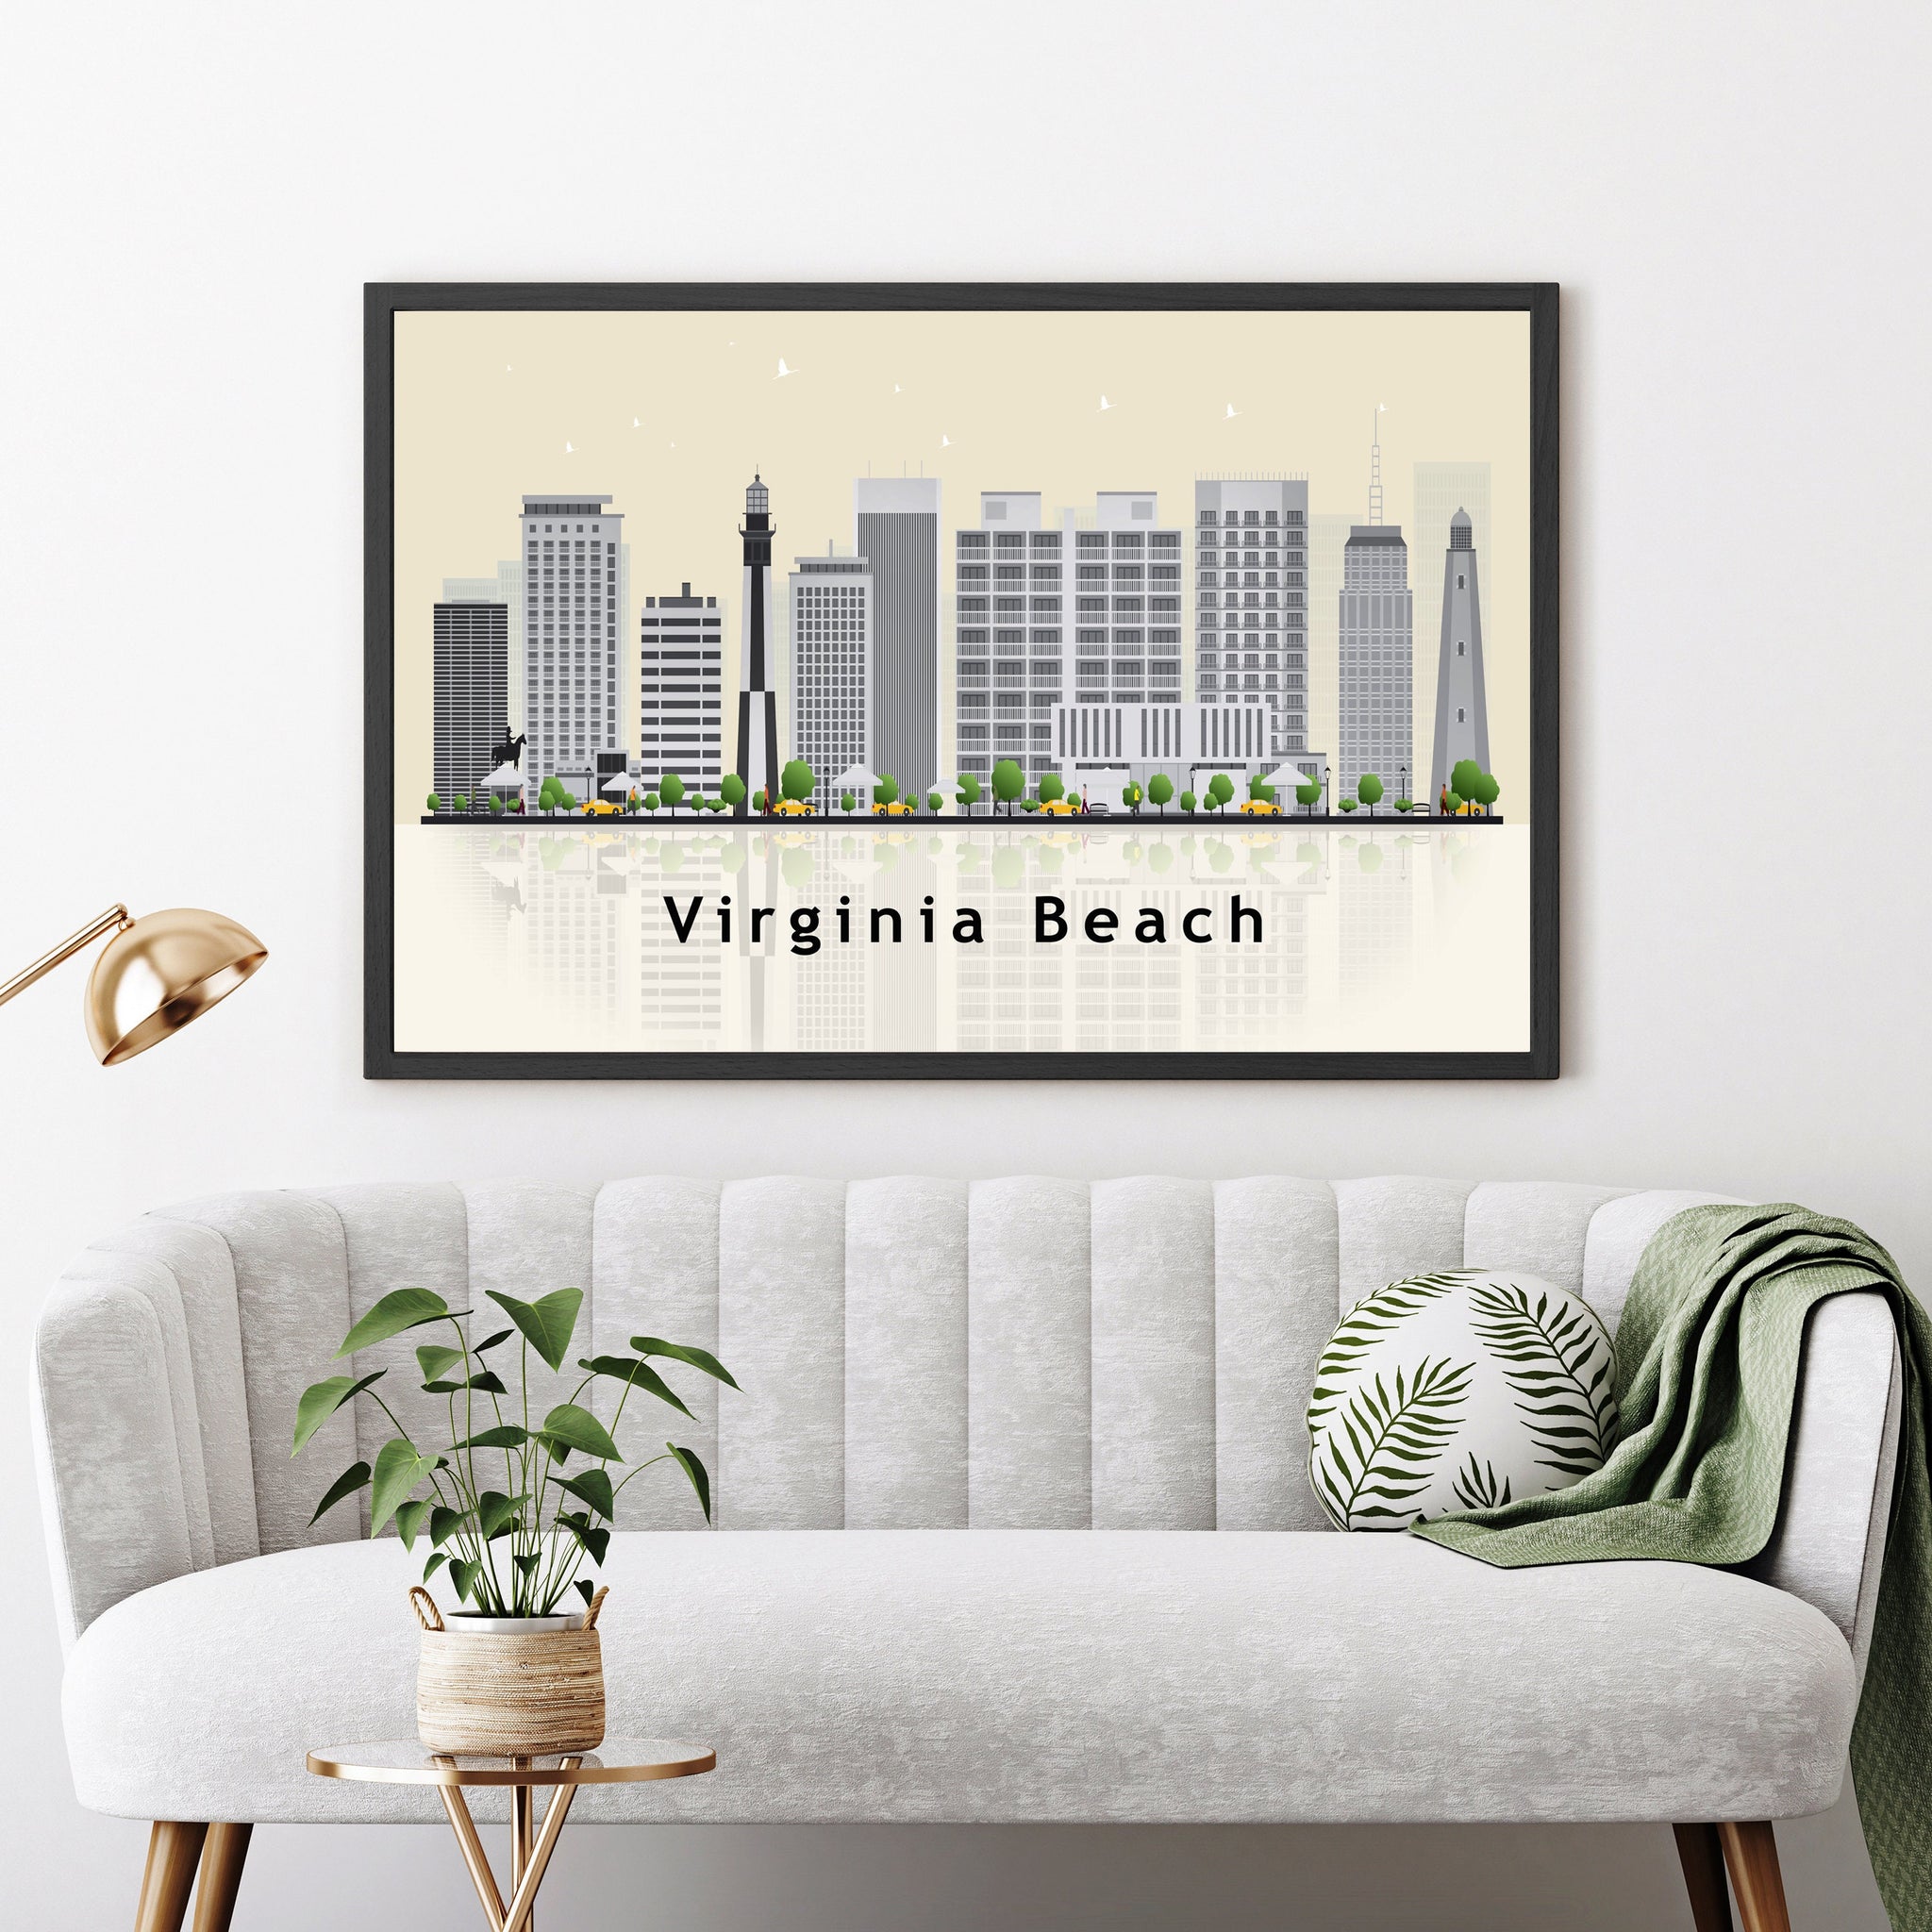 VIRGINIA BEACH Illustration skyline poster, Virginia state modern skyline cityscape poster print, Landmark map poster, Home wall art